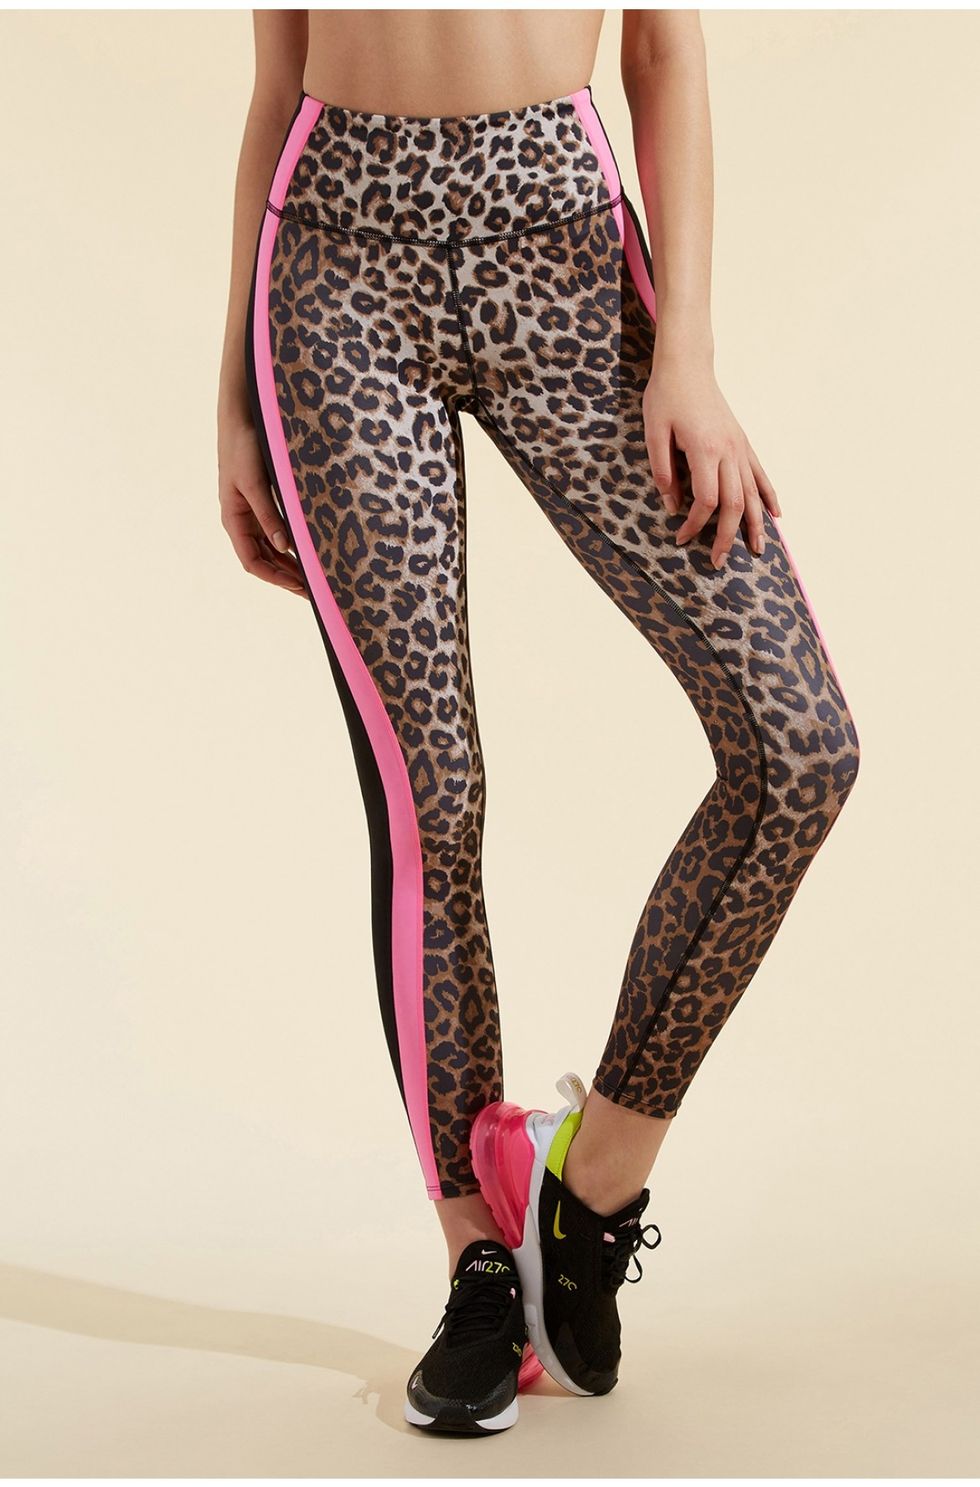 Veronica Beard x Bandier Leopard Print Neon Leggings Review - Most  Comfortable Leggings